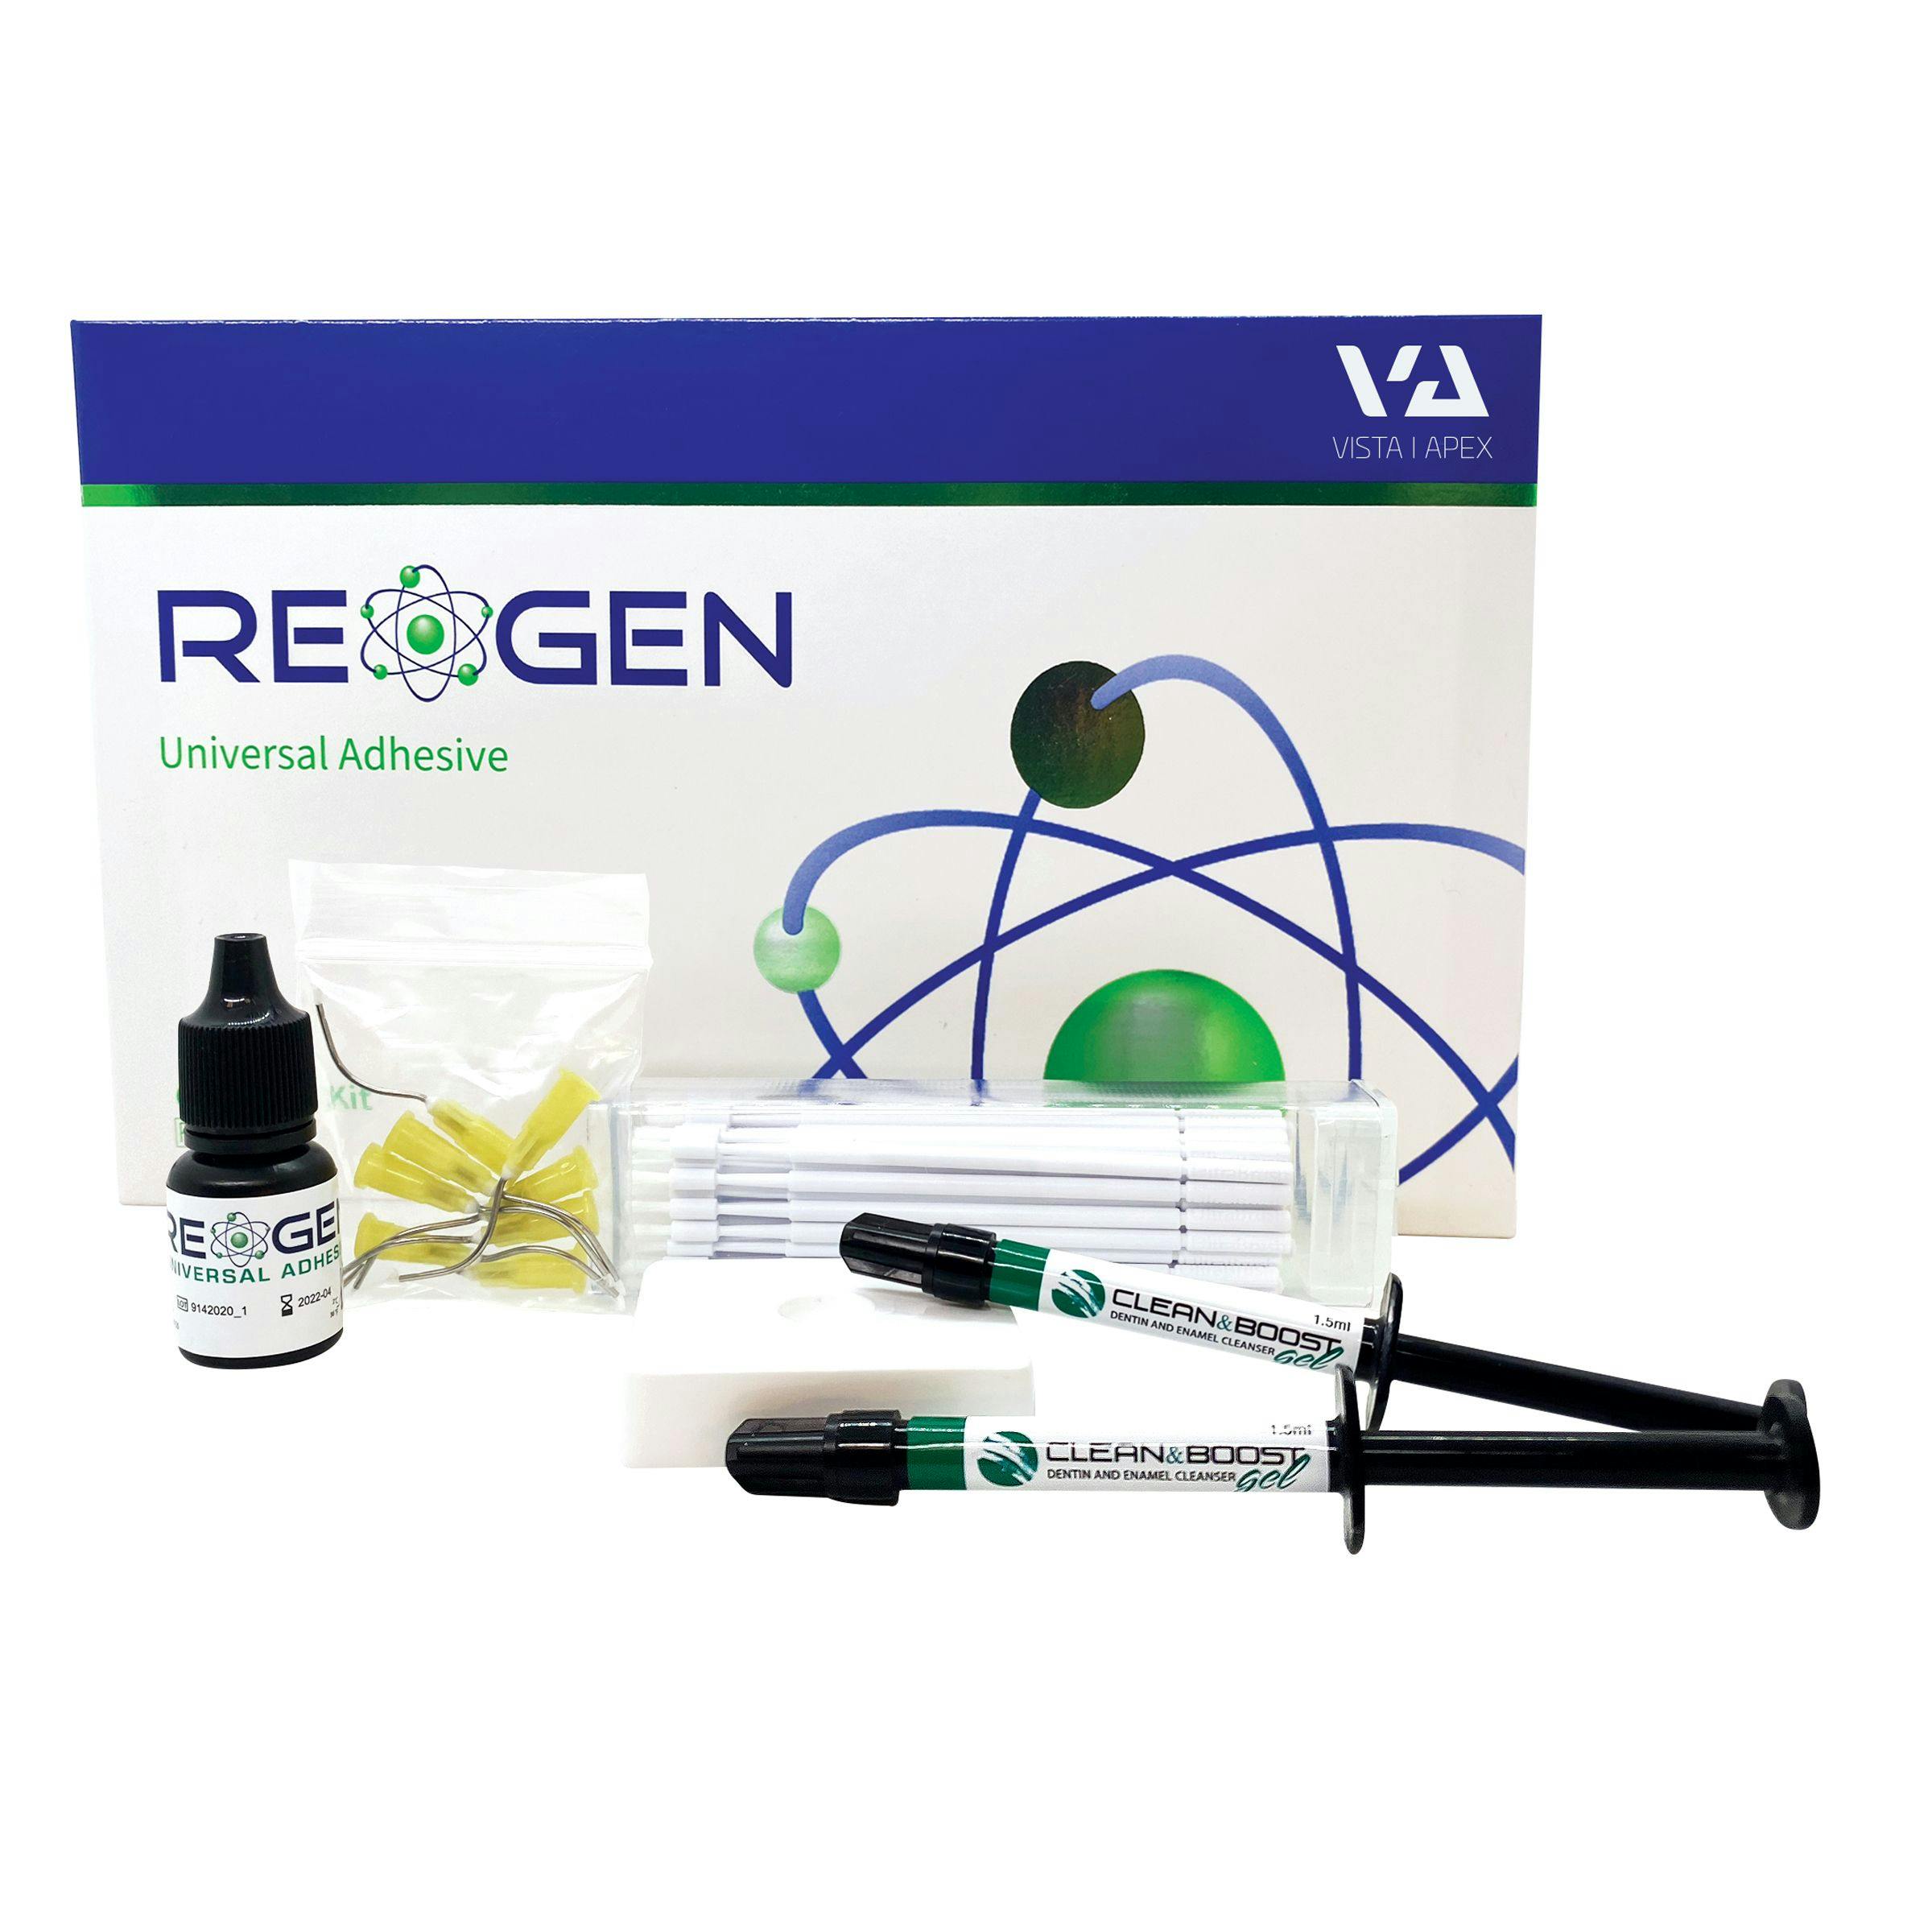 RE-GEN™ Universal Adhesive from Vista Apex | Image Credit: © Vista Apex